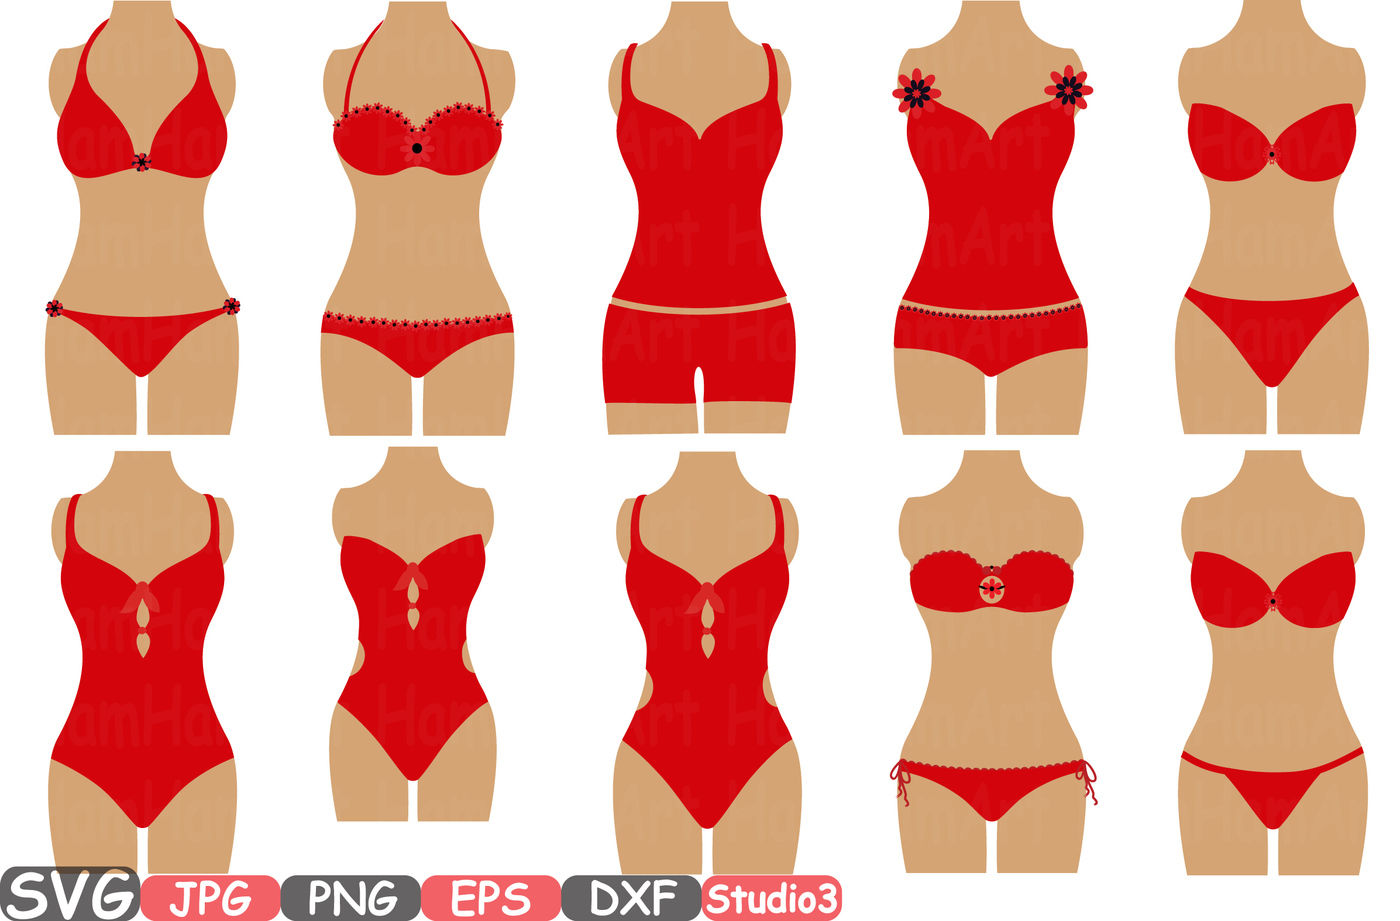 Underwear, underwear Vector Icons free download in SVG, PNG Format